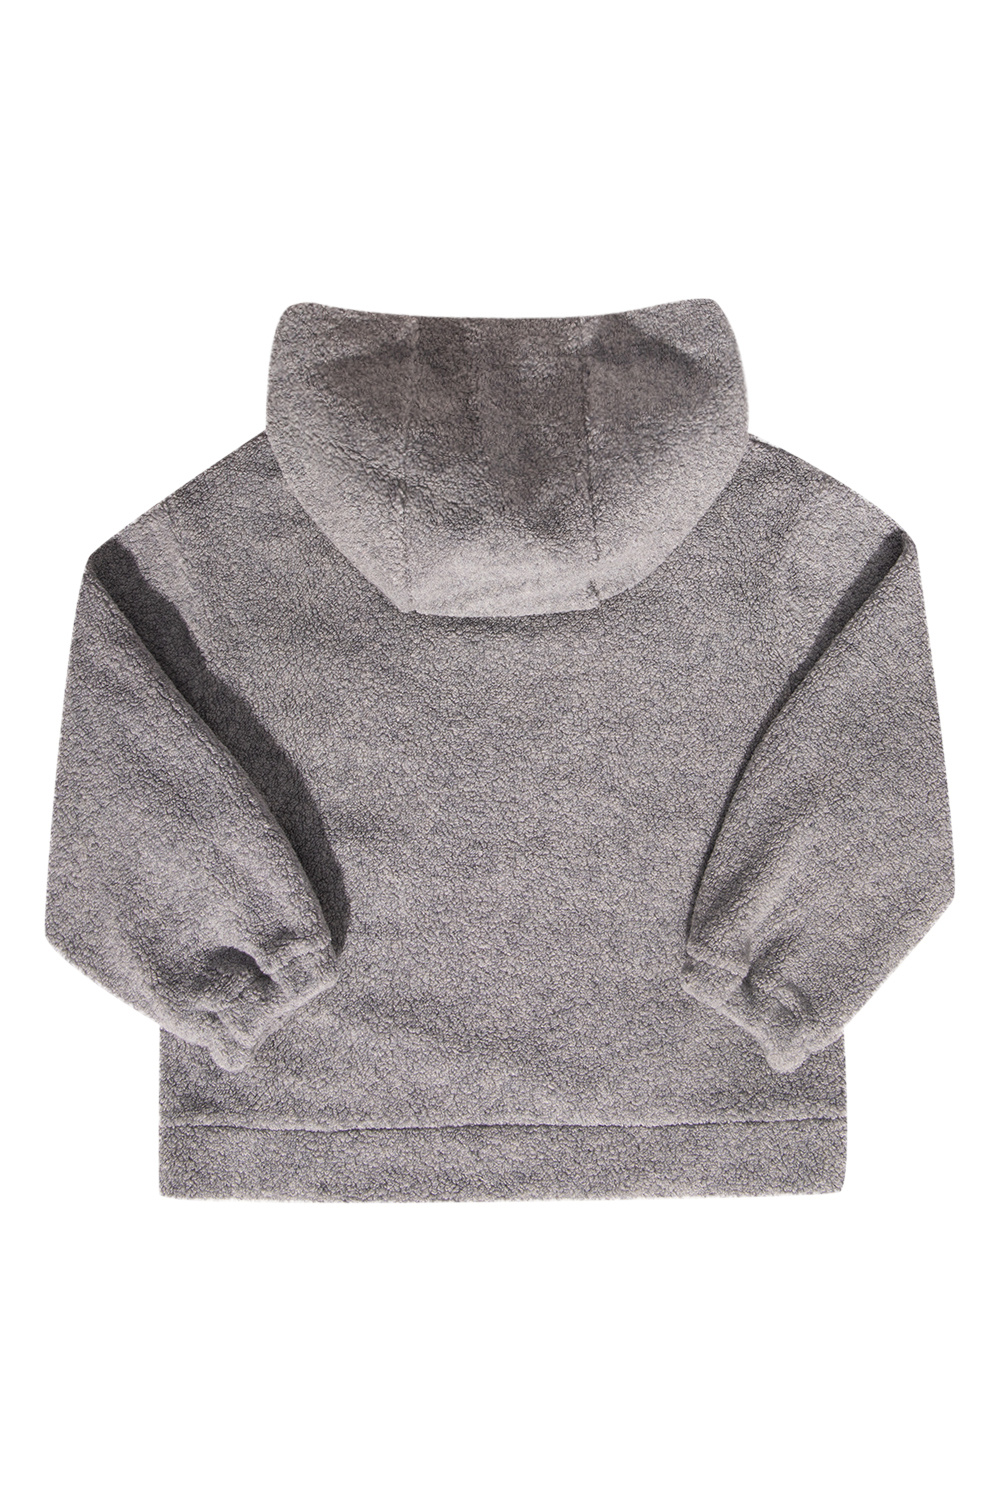 fendi rtel Kids Fleece hoodie with logo